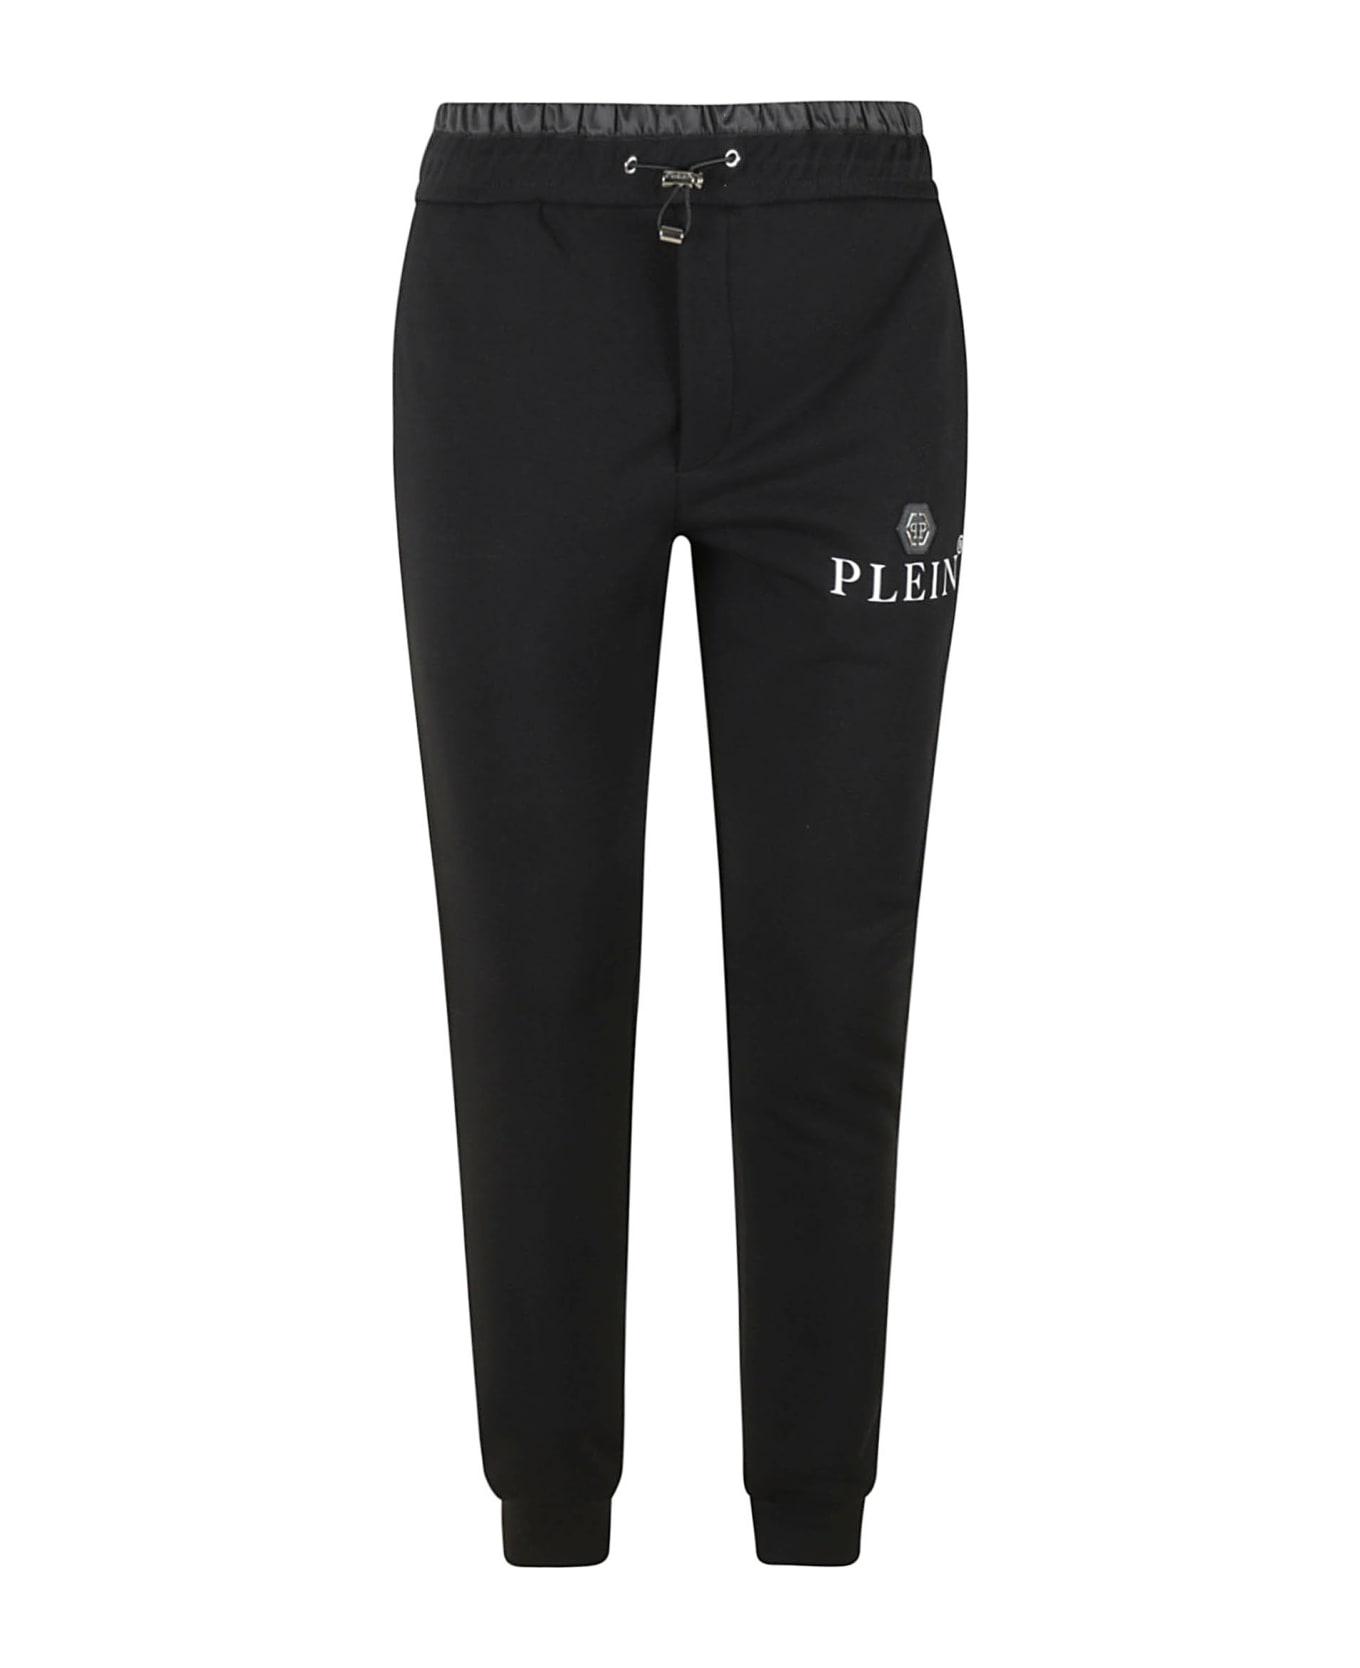 Philipp Plein Hexagon Track Pants - Black